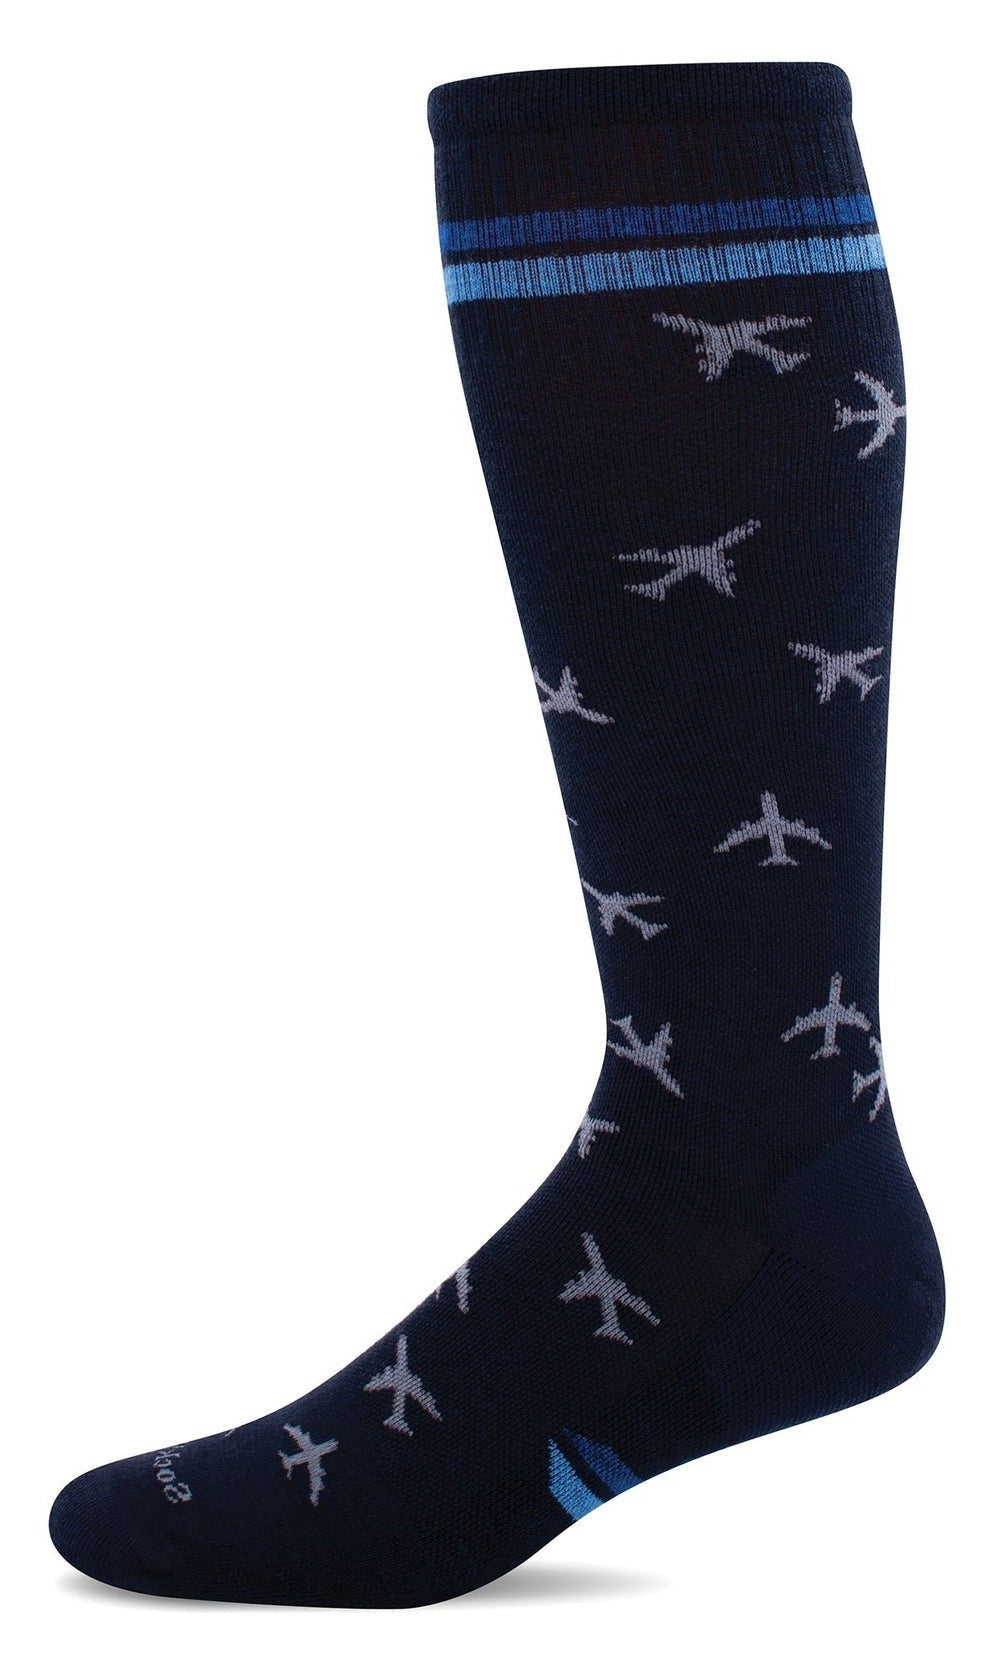 In Flight | Men | Compression | Navy - Socks - Sockwell